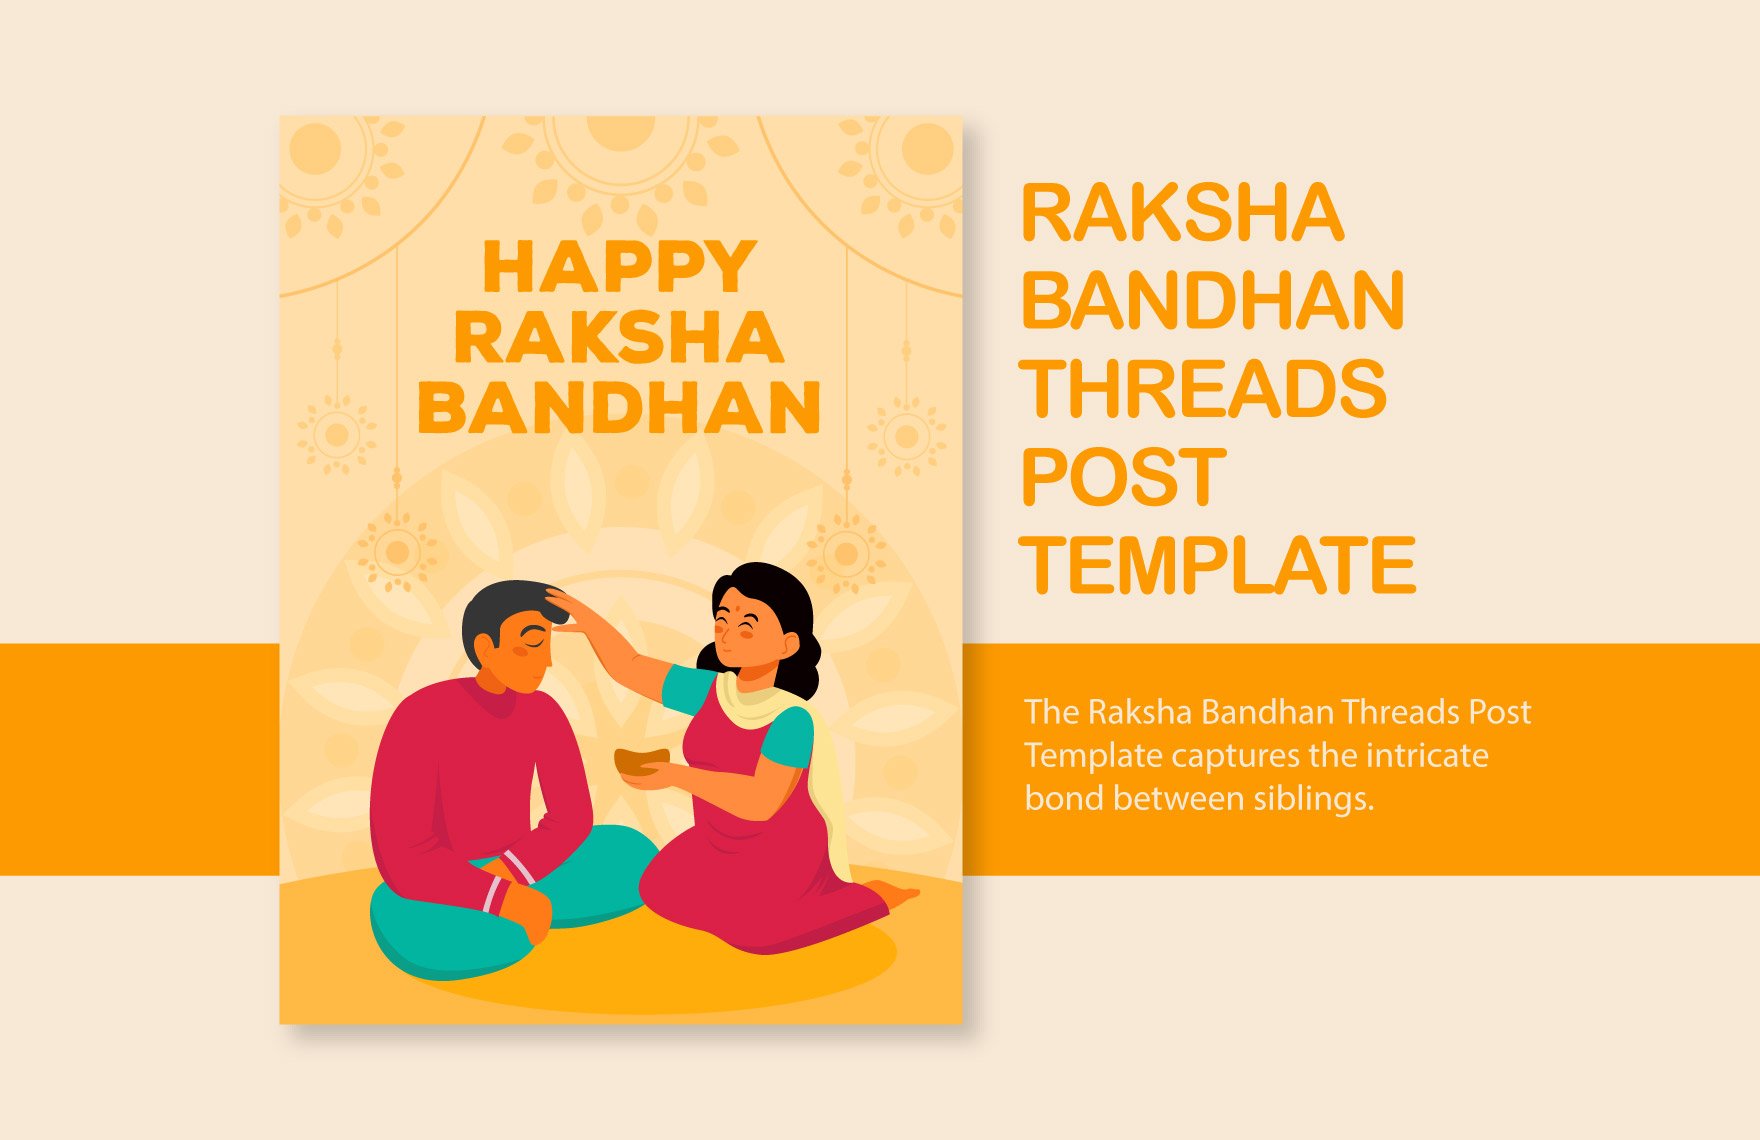 Free Raksha Bandhan Threads Post Template in Illustrator, PSD, PNG